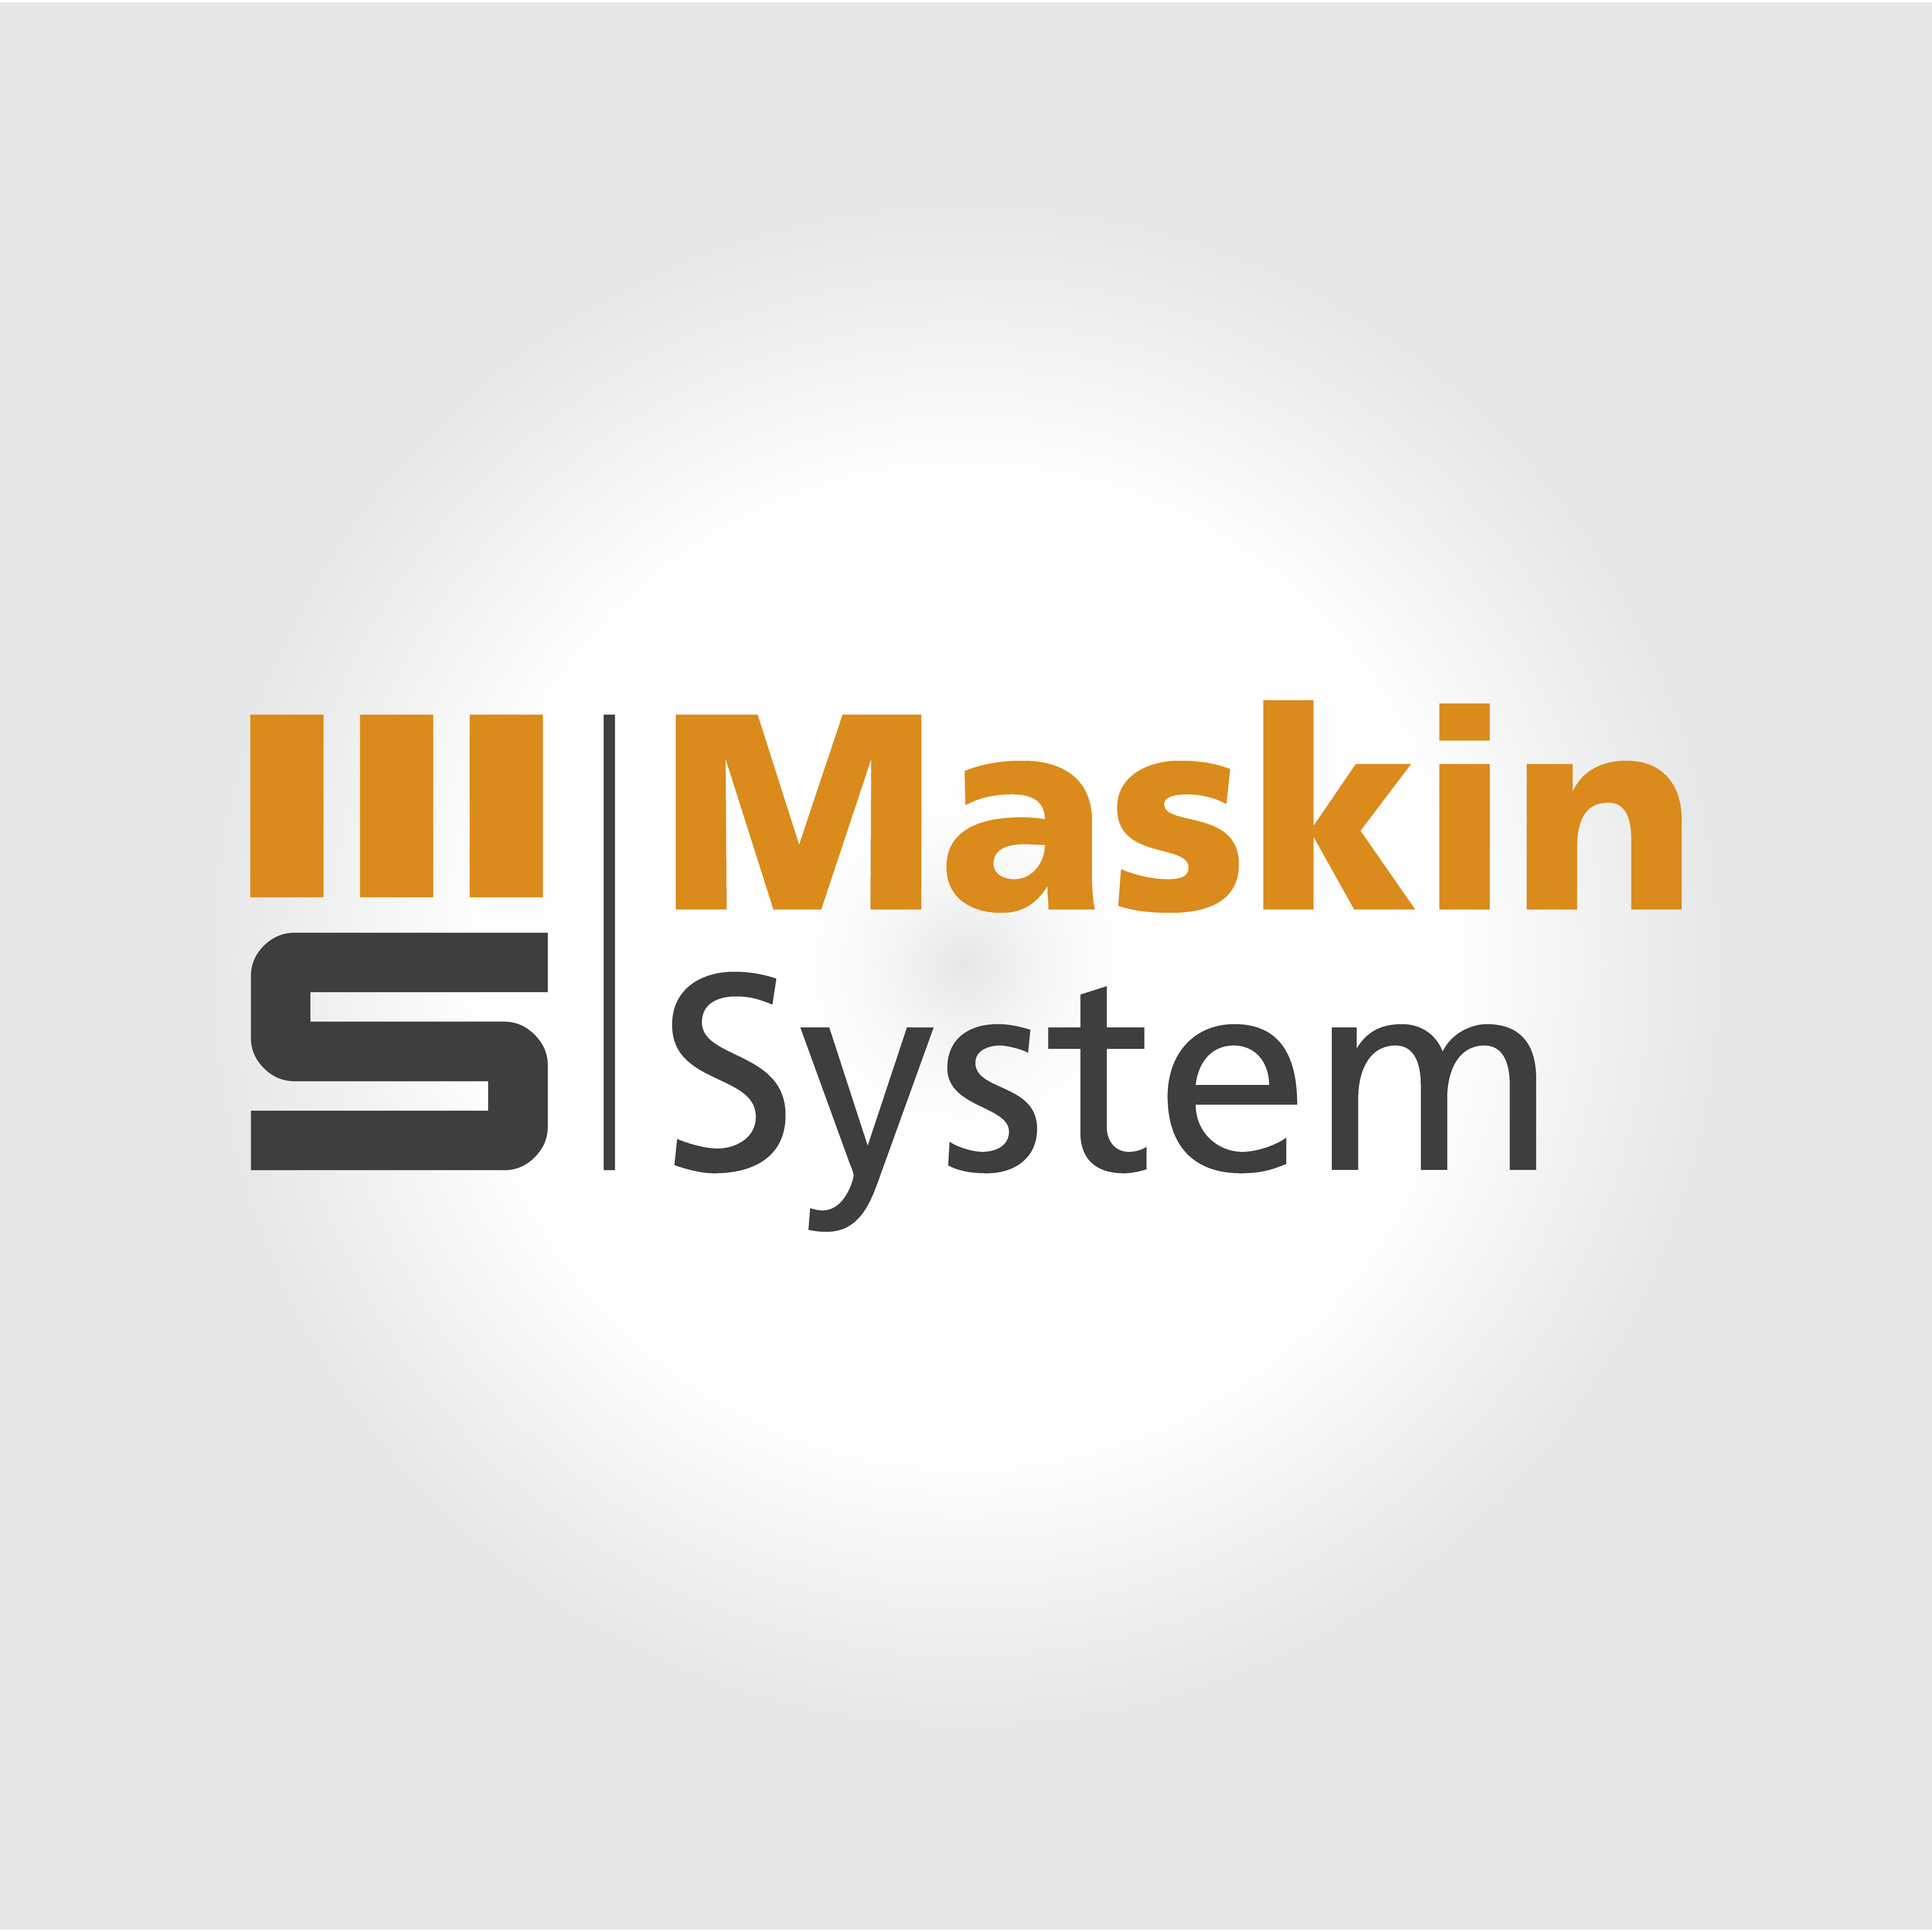 Maskinsystem